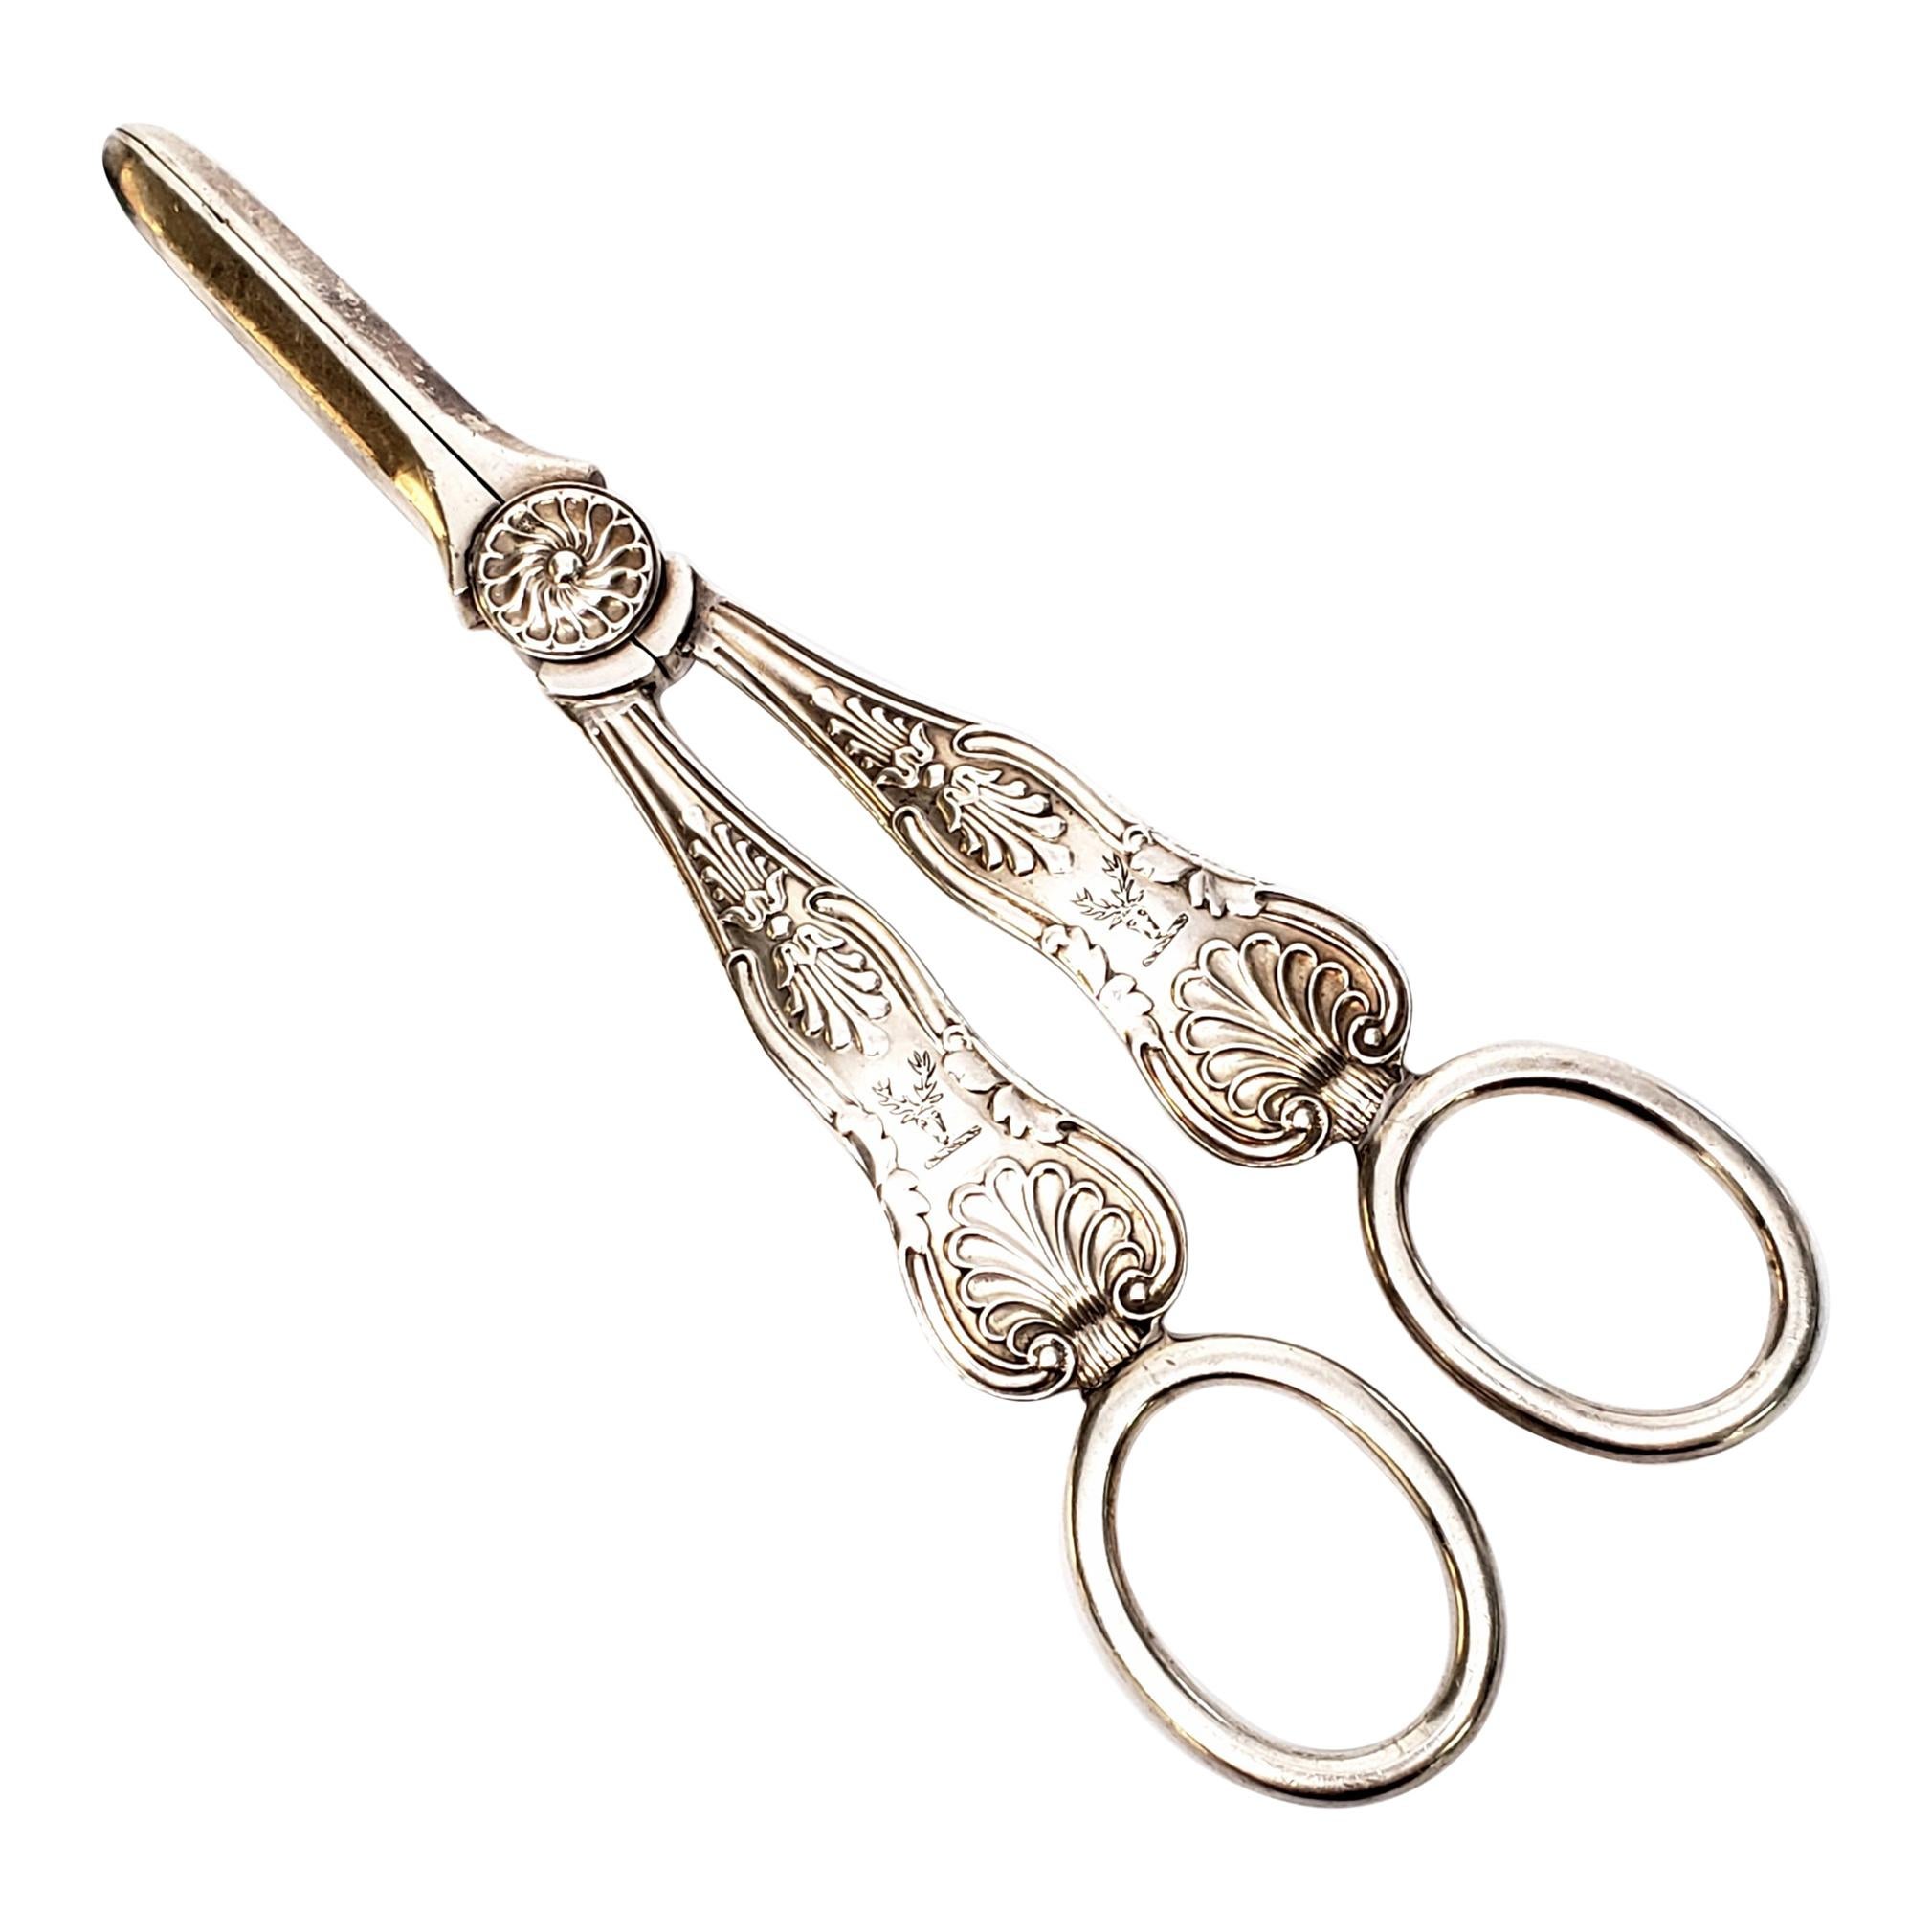 Wilson & Gill English Sterling Silver Grape Shears / Scissors